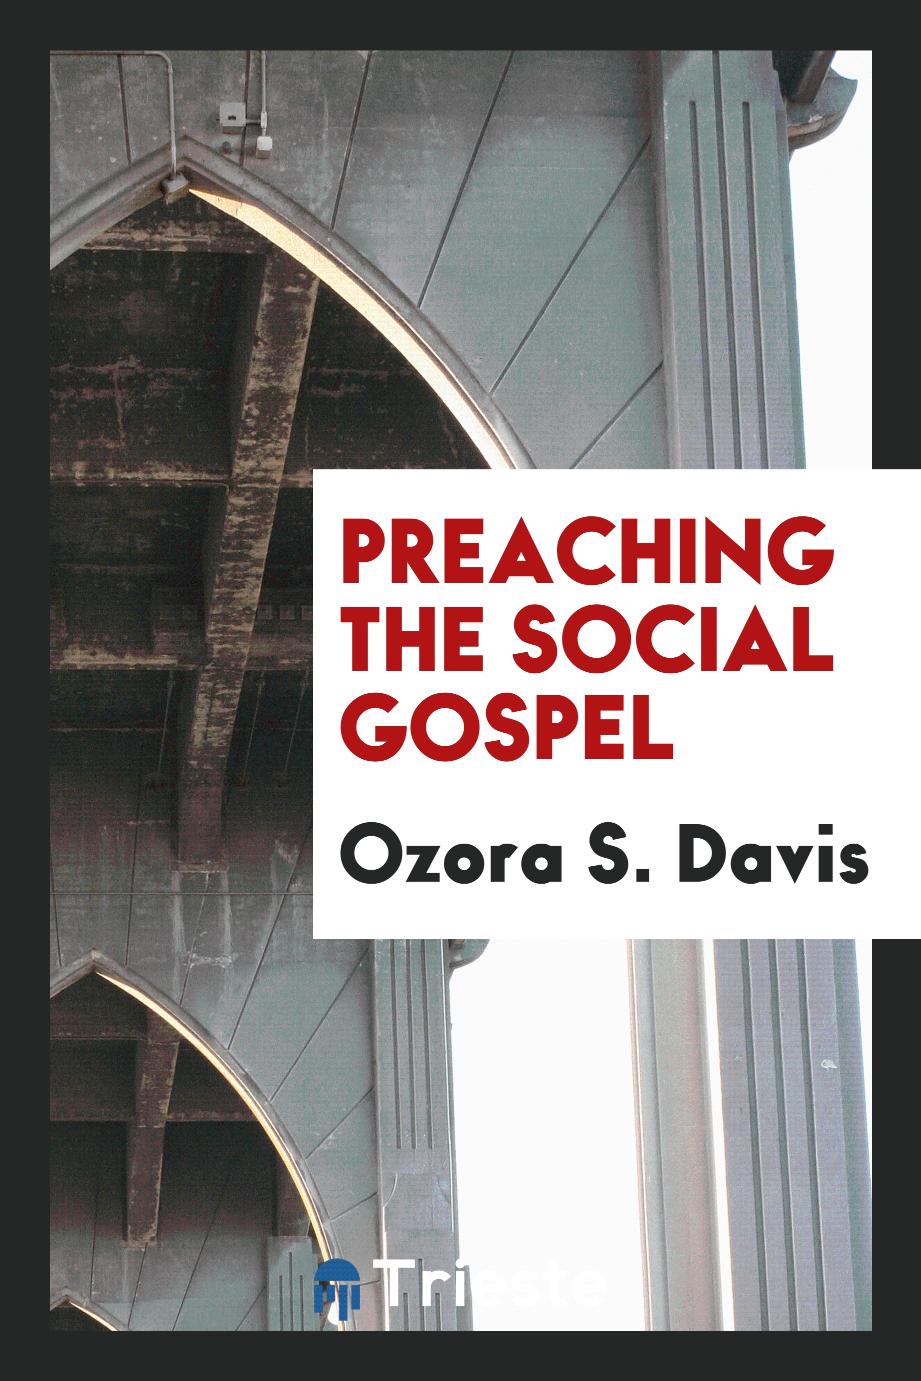 Preaching the social gospel